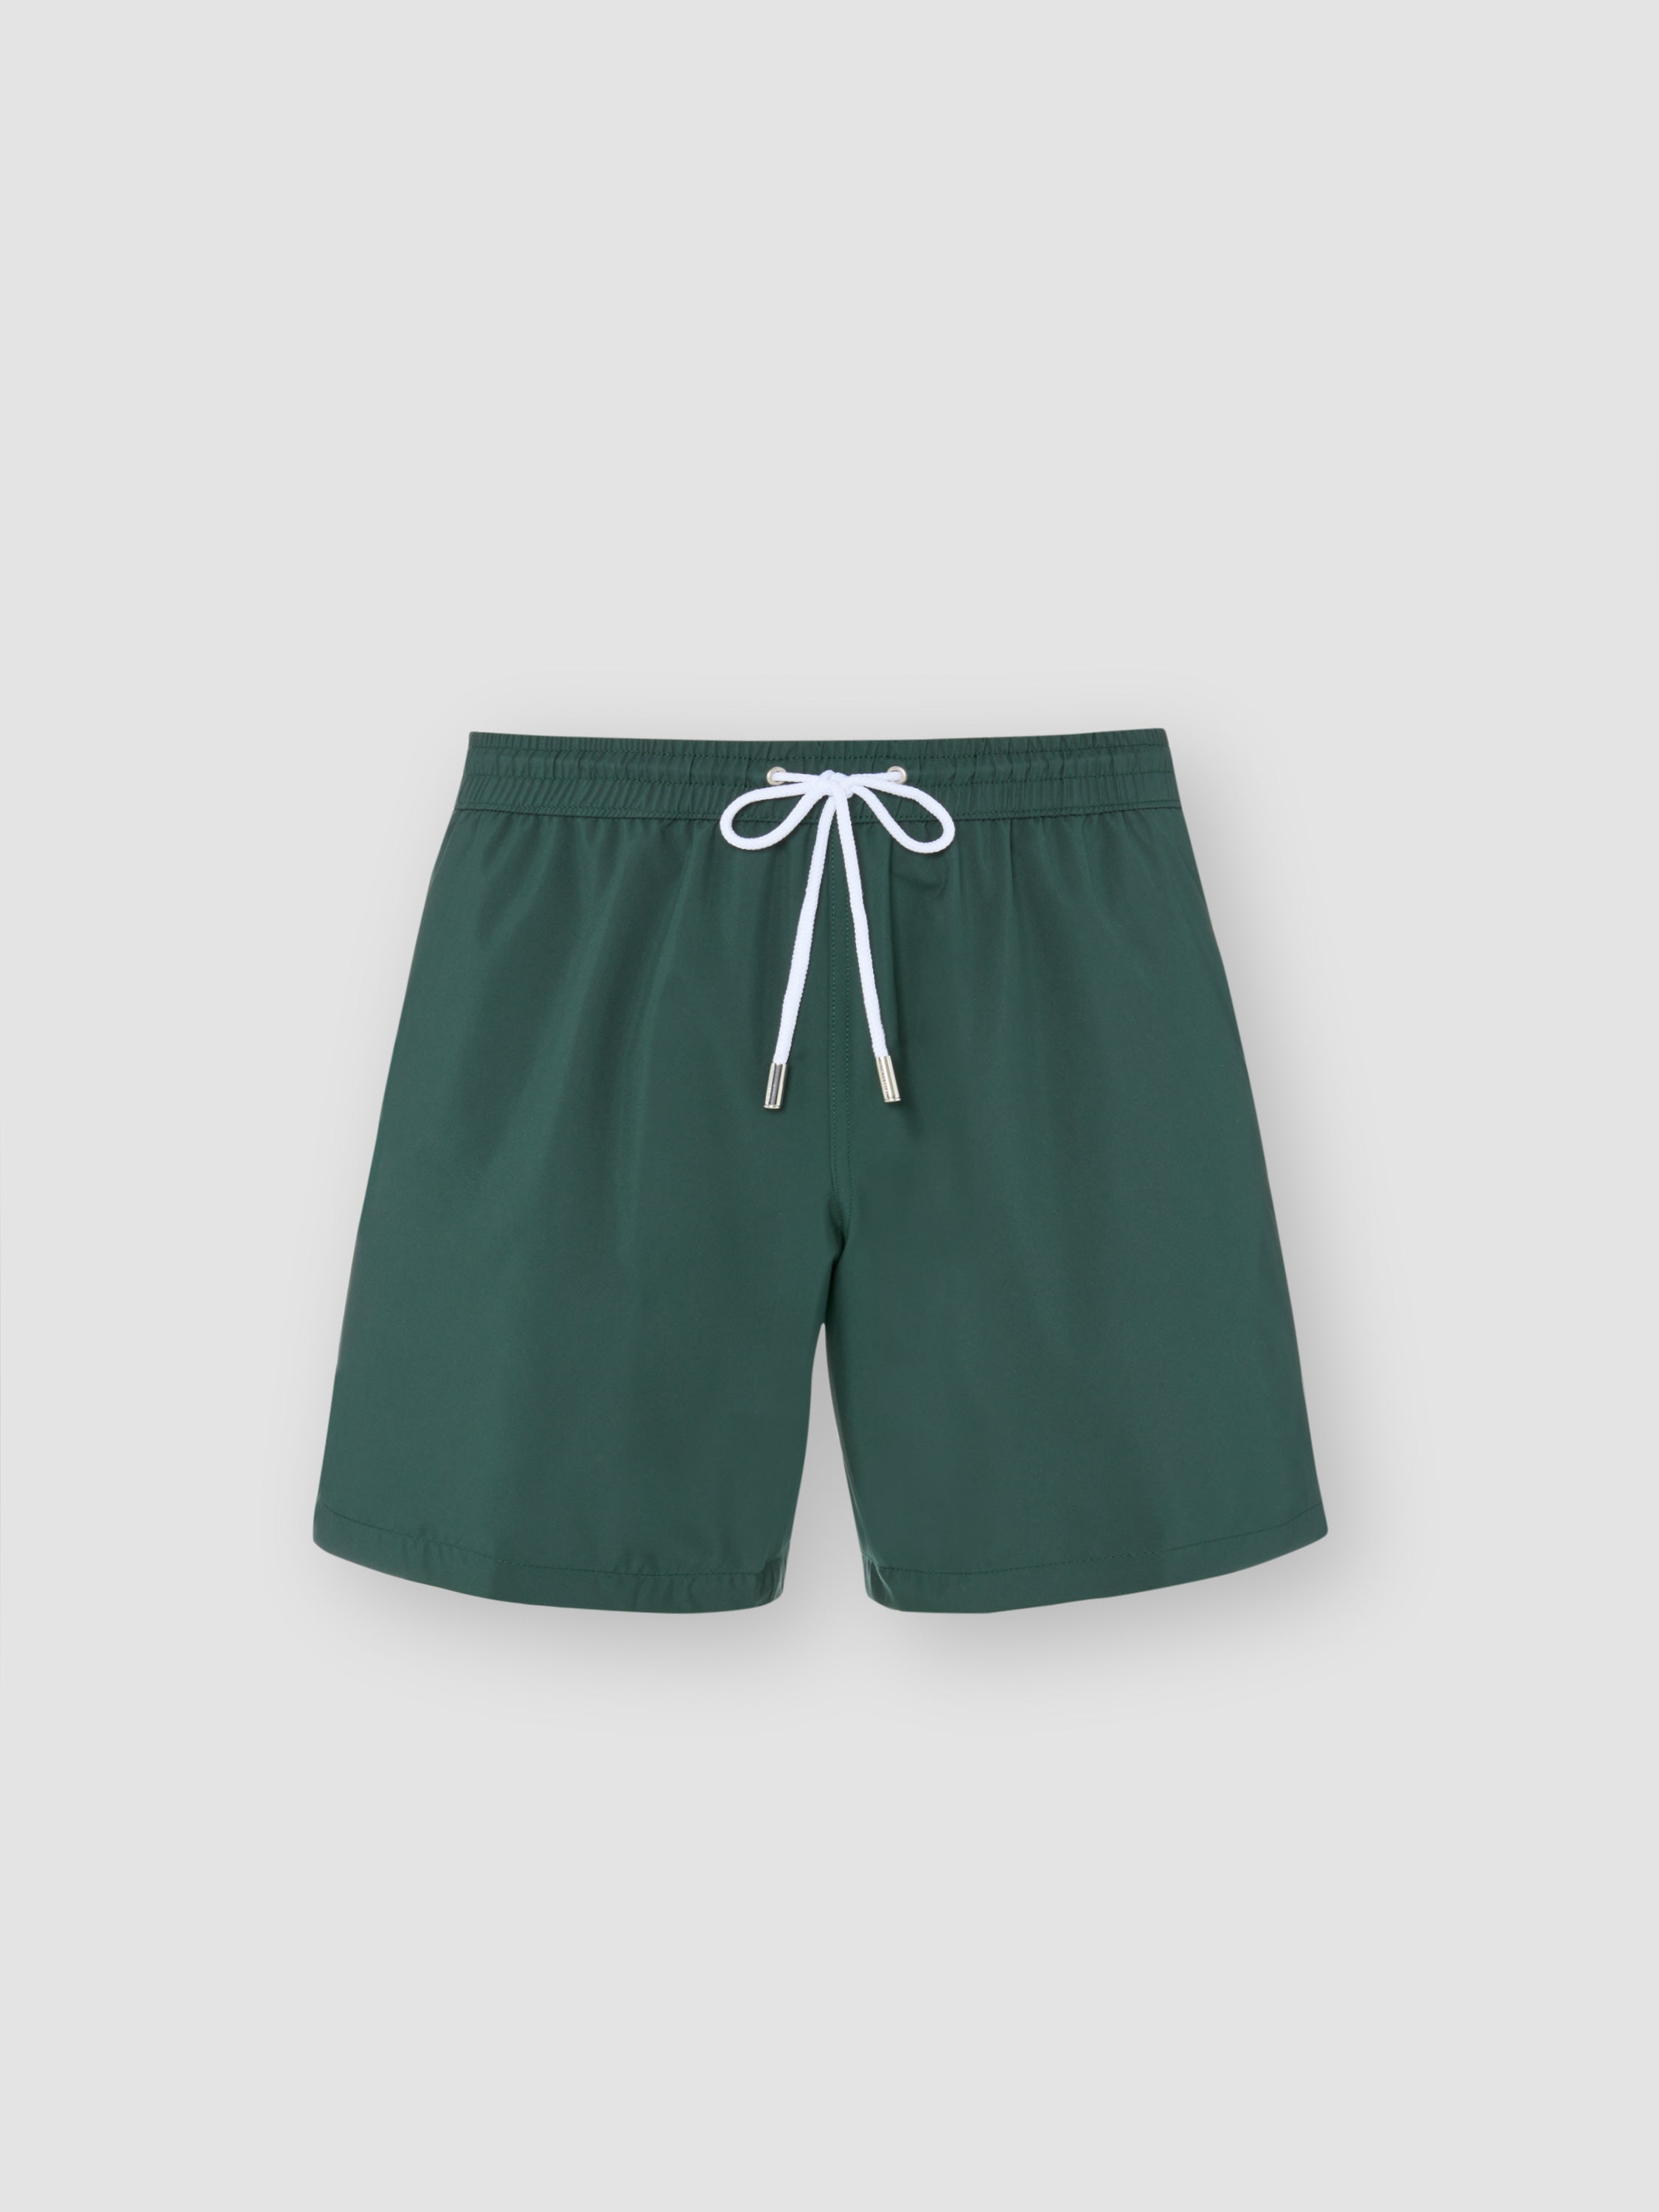 Technical Nylon Mid Length Swim Shorts Dark Green Product Image